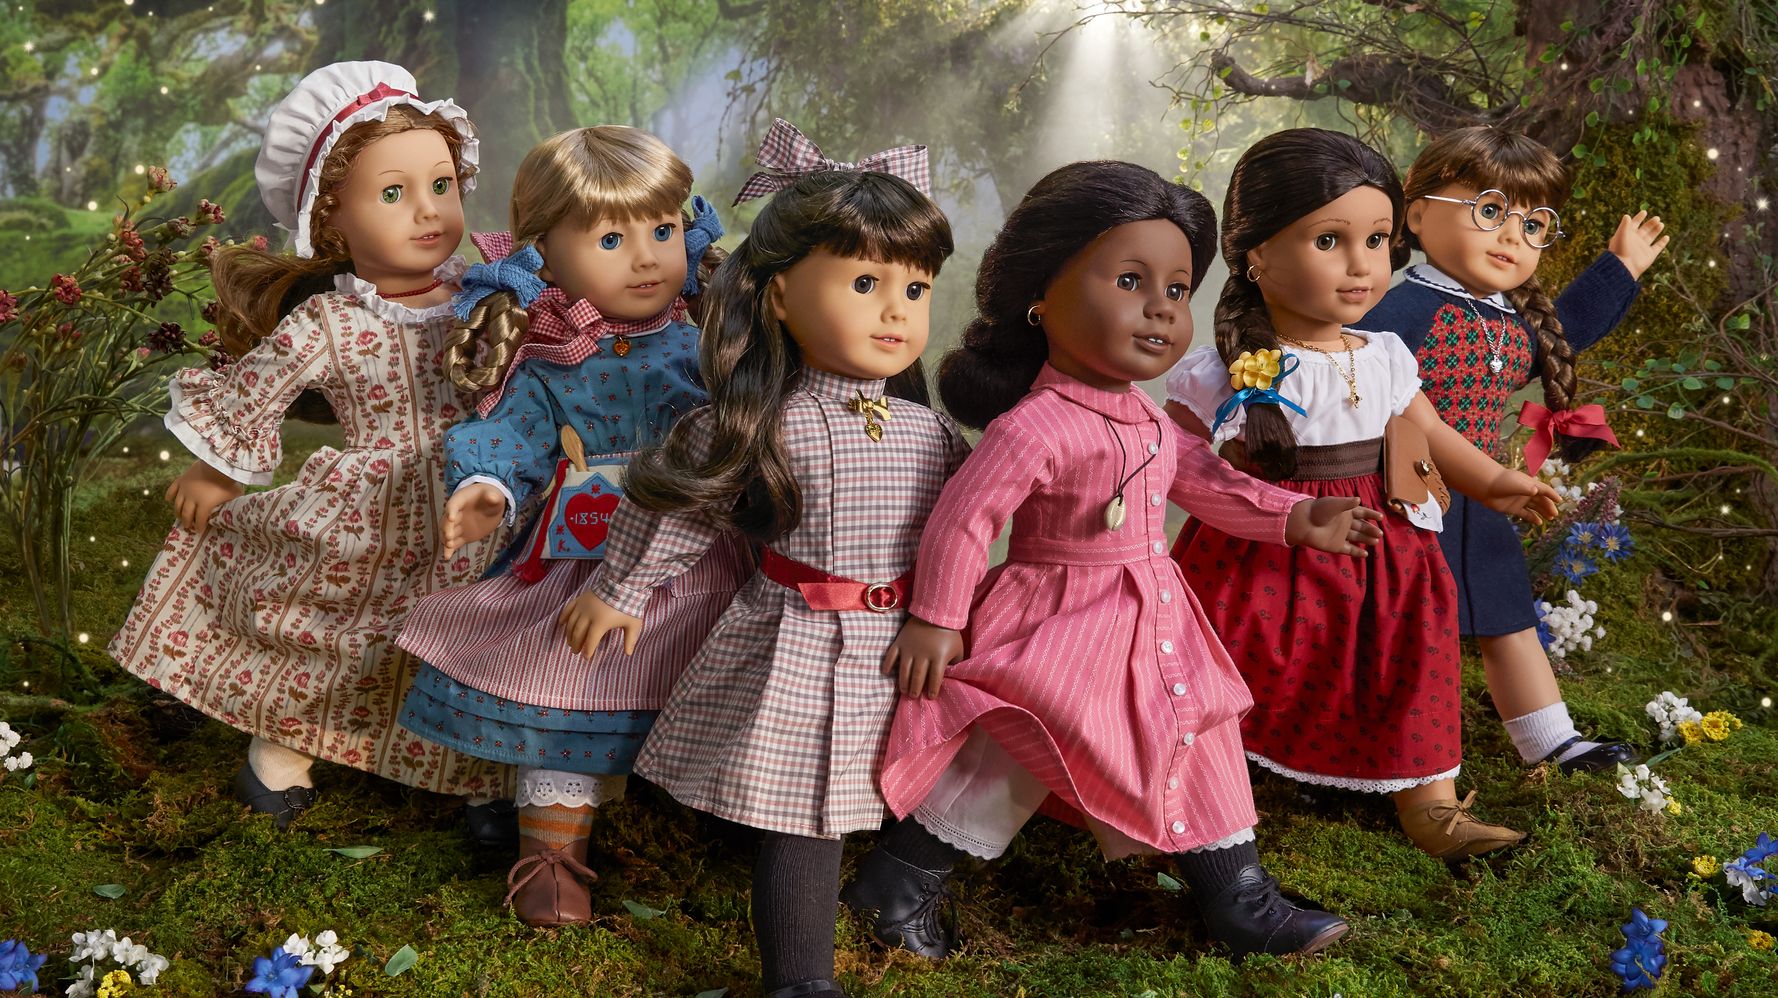 Nostalgia Alert: American Girl Is Reintroducing Its Original Dolls